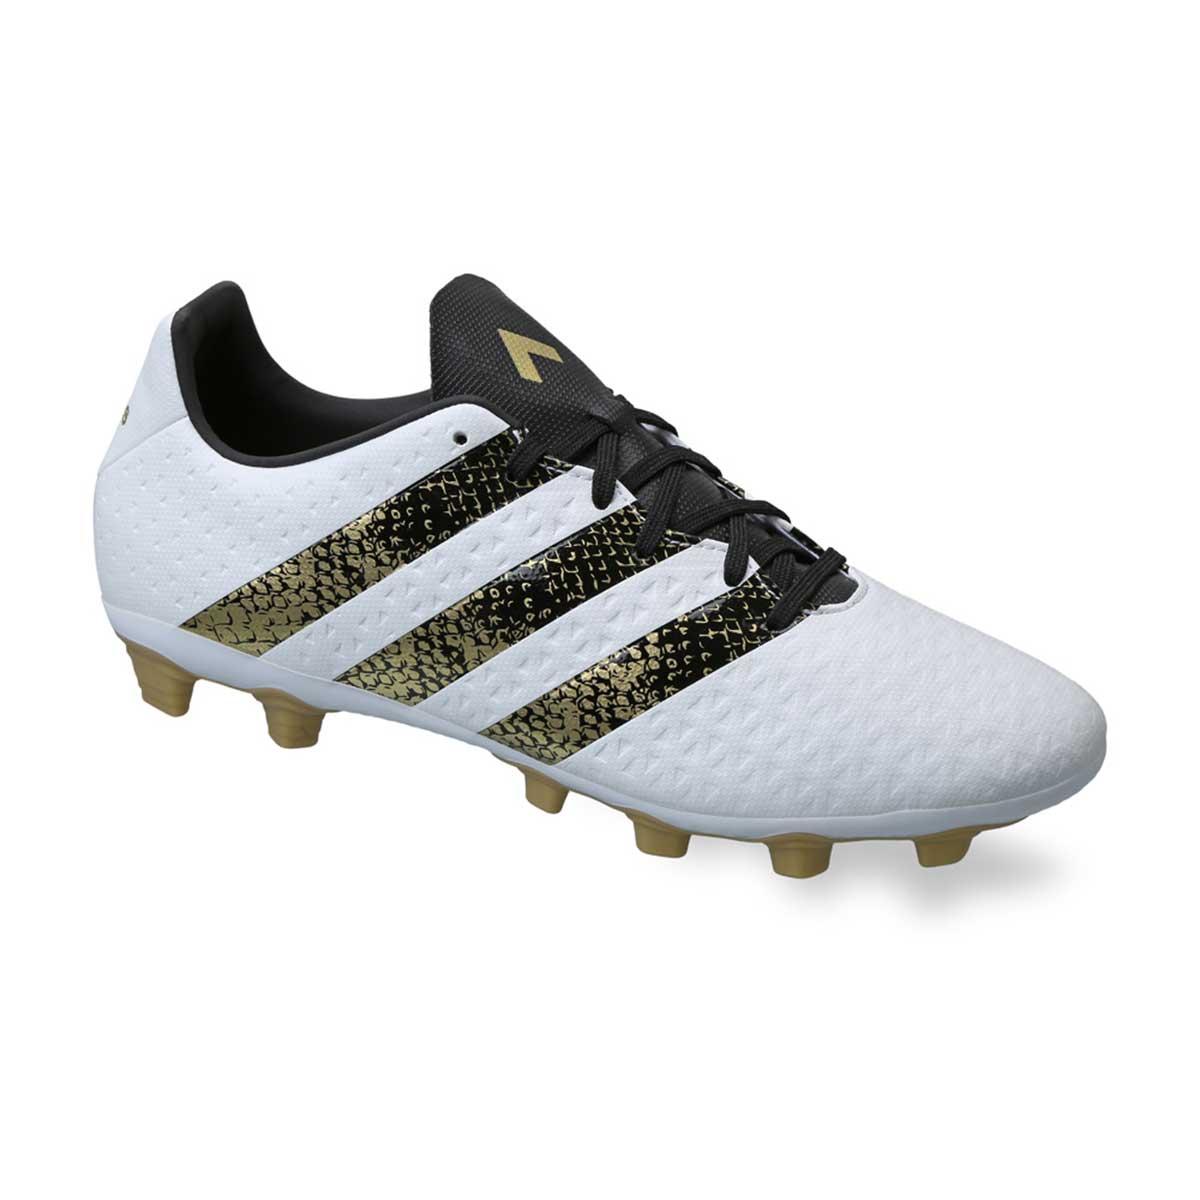 Adidas 16.4 FXG Football Shoes (White/Black/Gold) Online